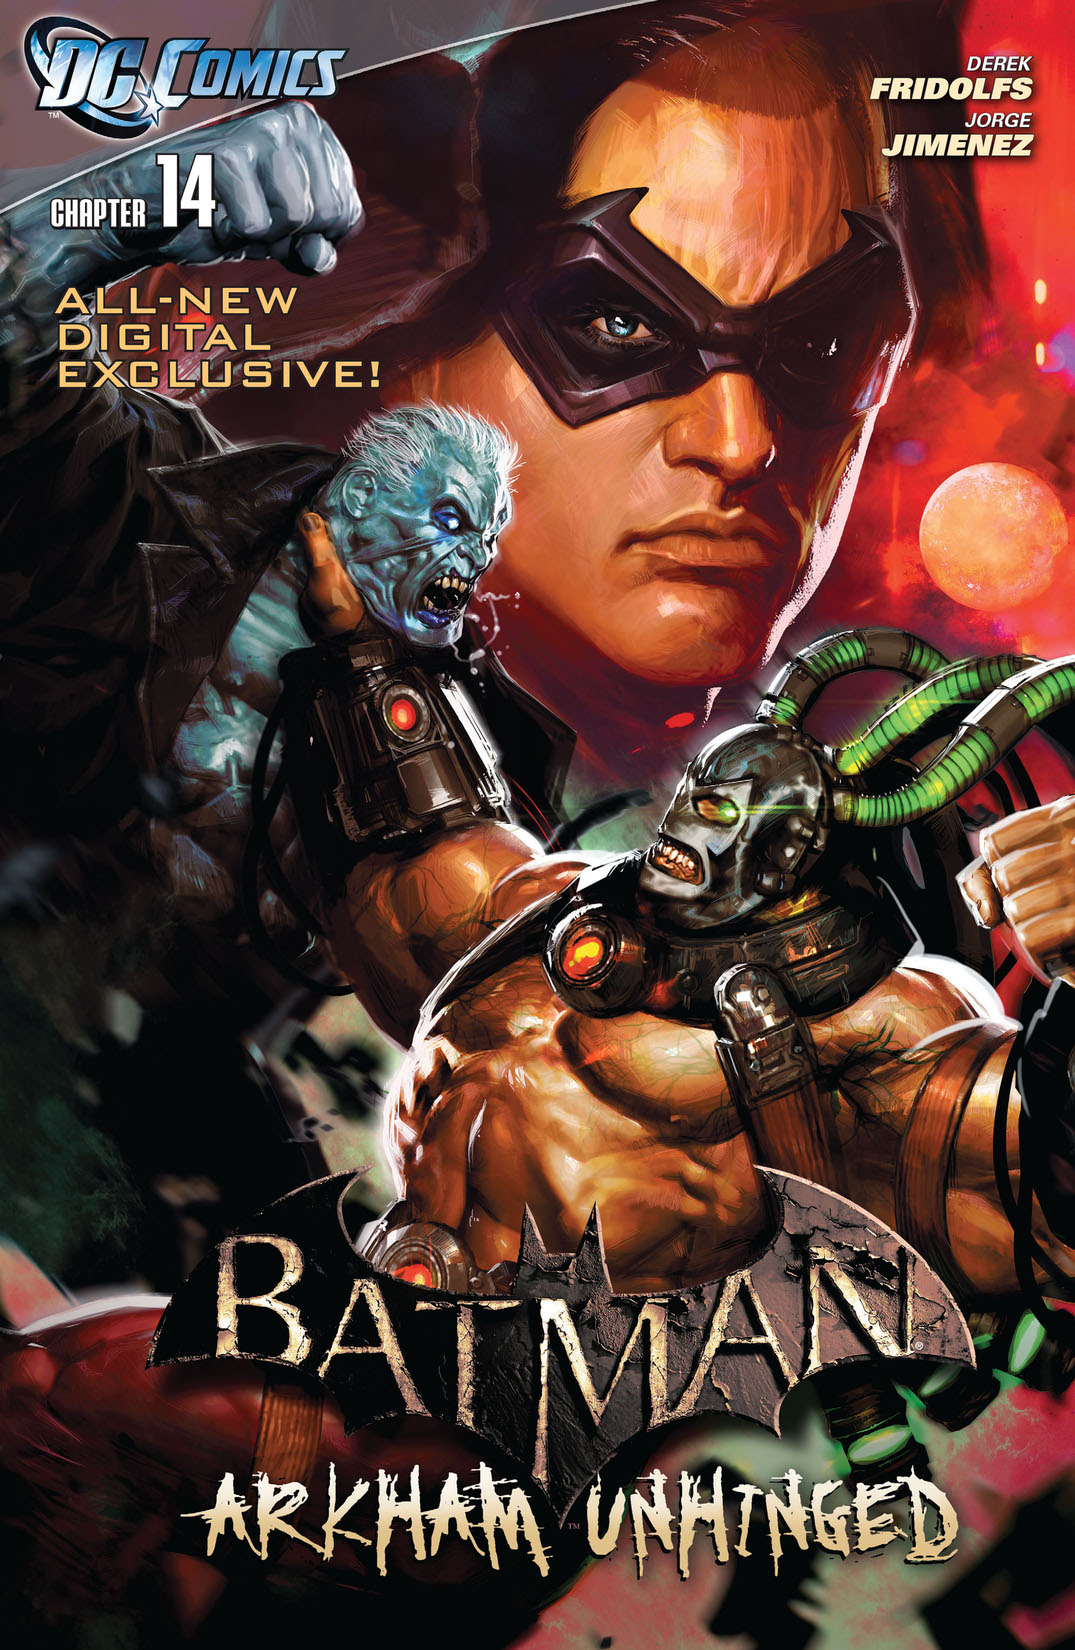 Batman: Arkham Unhinged #14 preview images